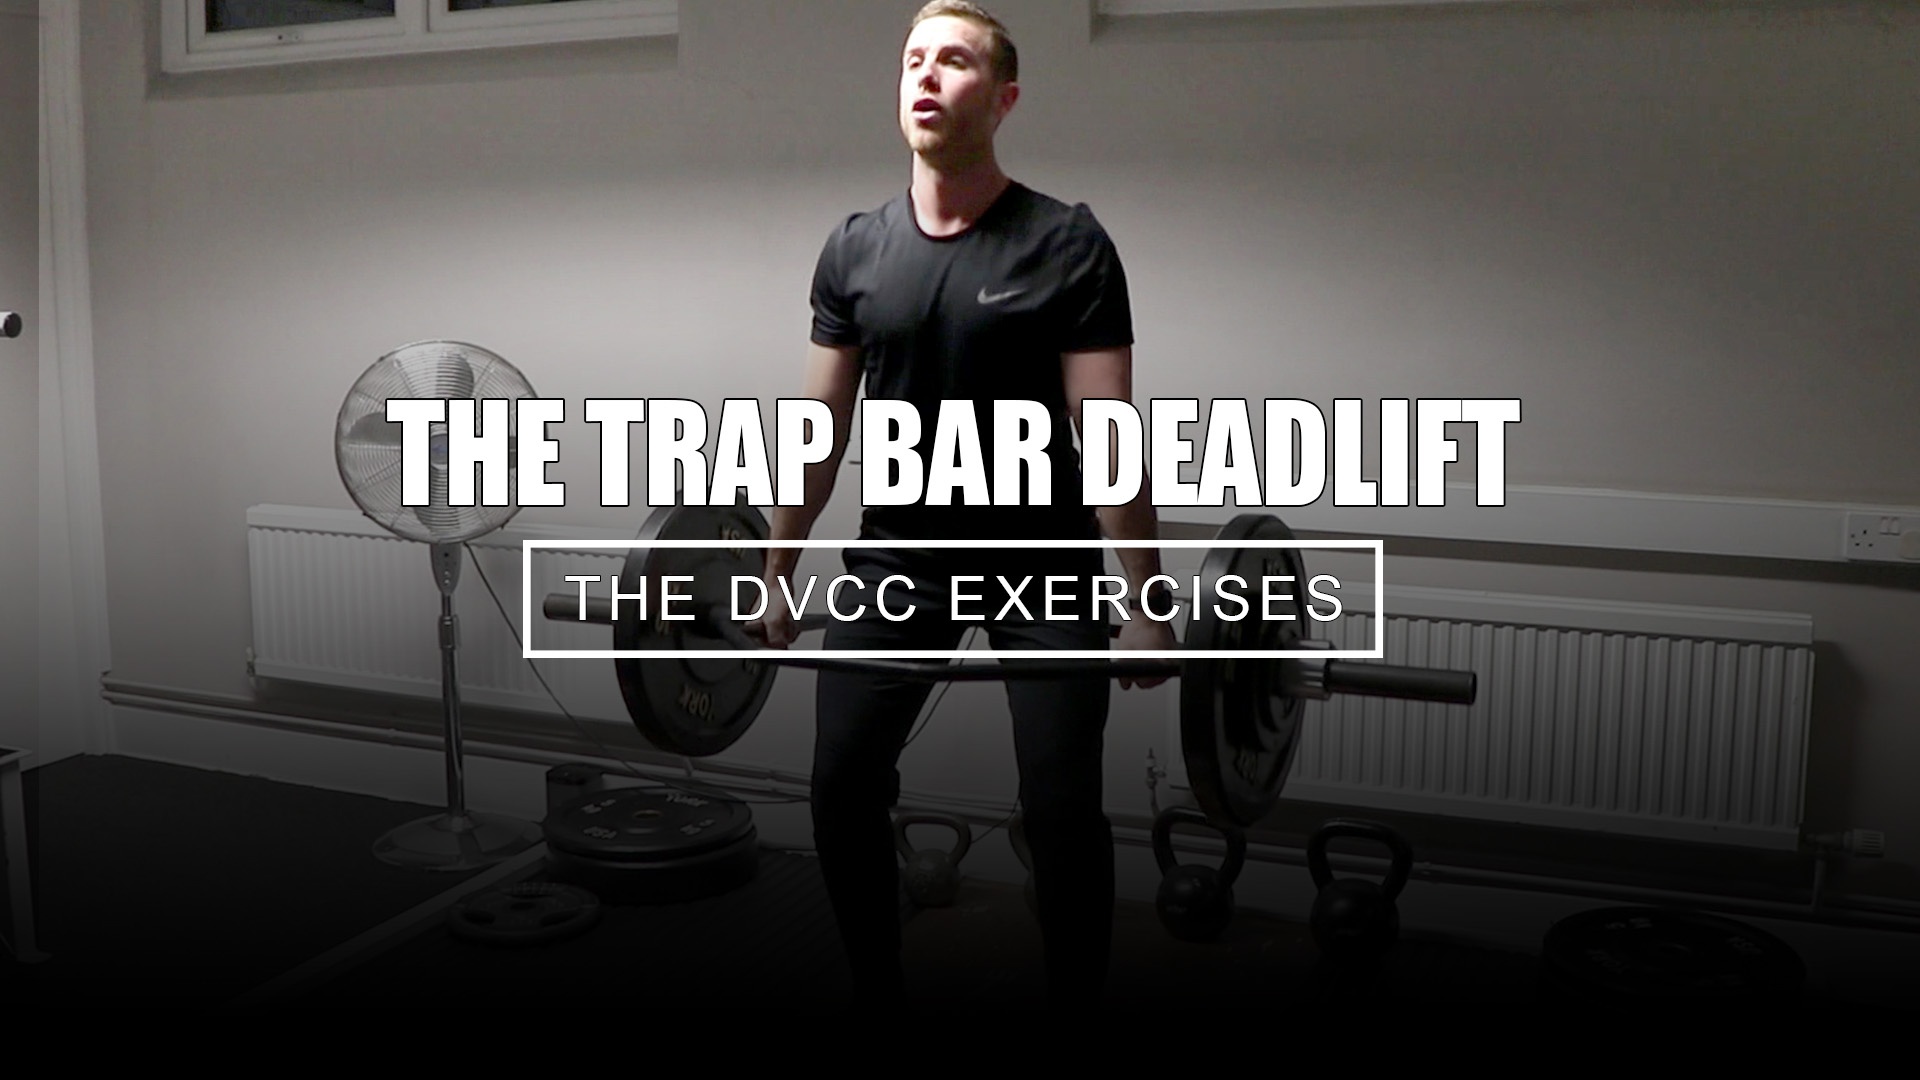 Trap Bar deadlift